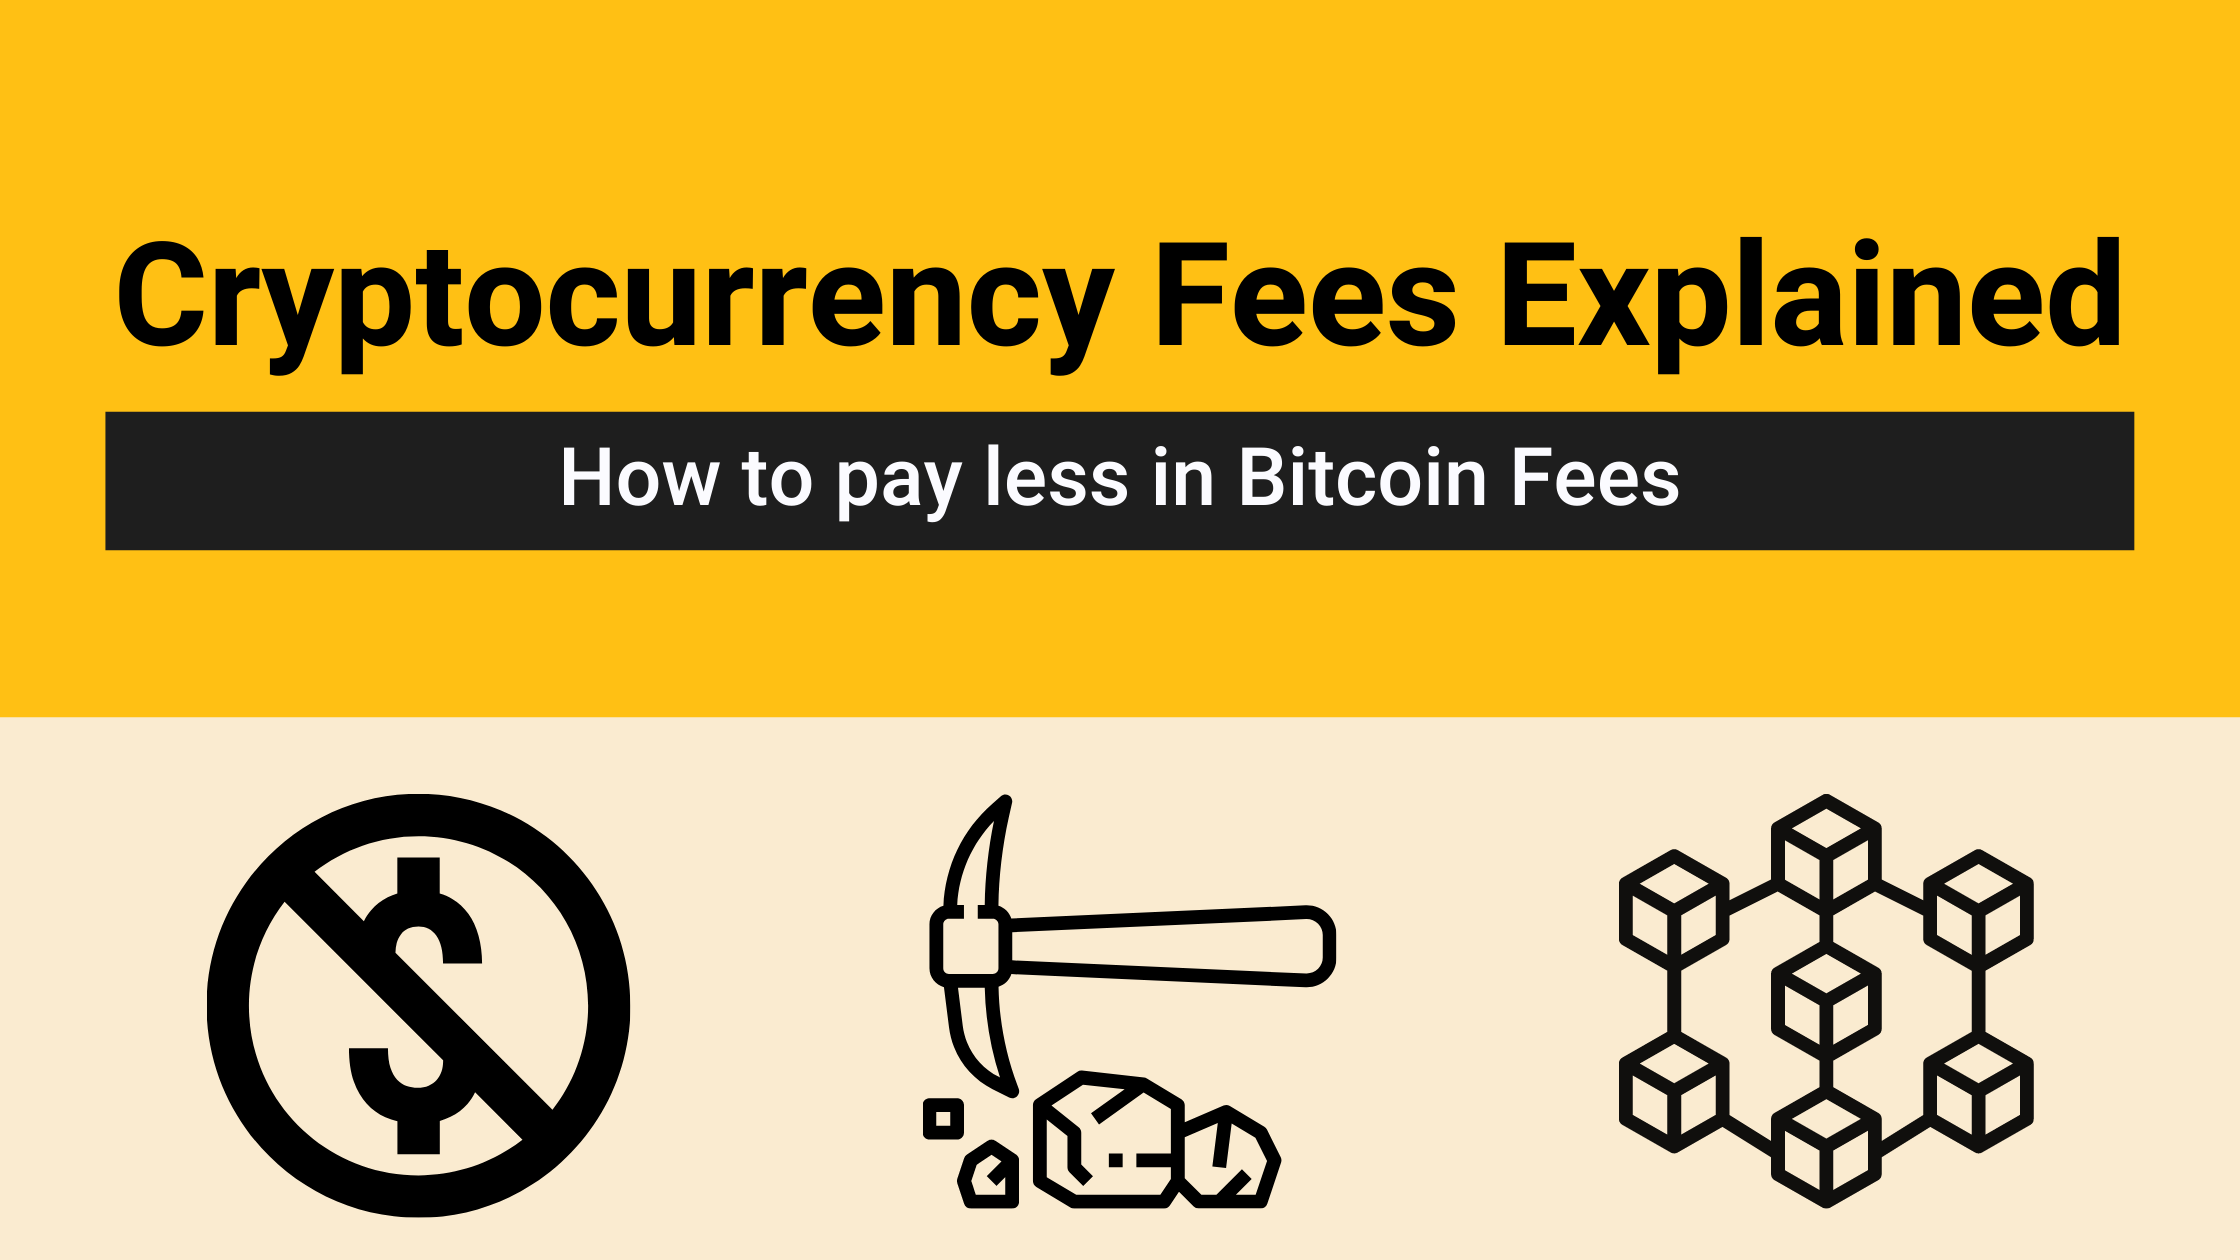 Transaction Fees on the Blockchain Explained